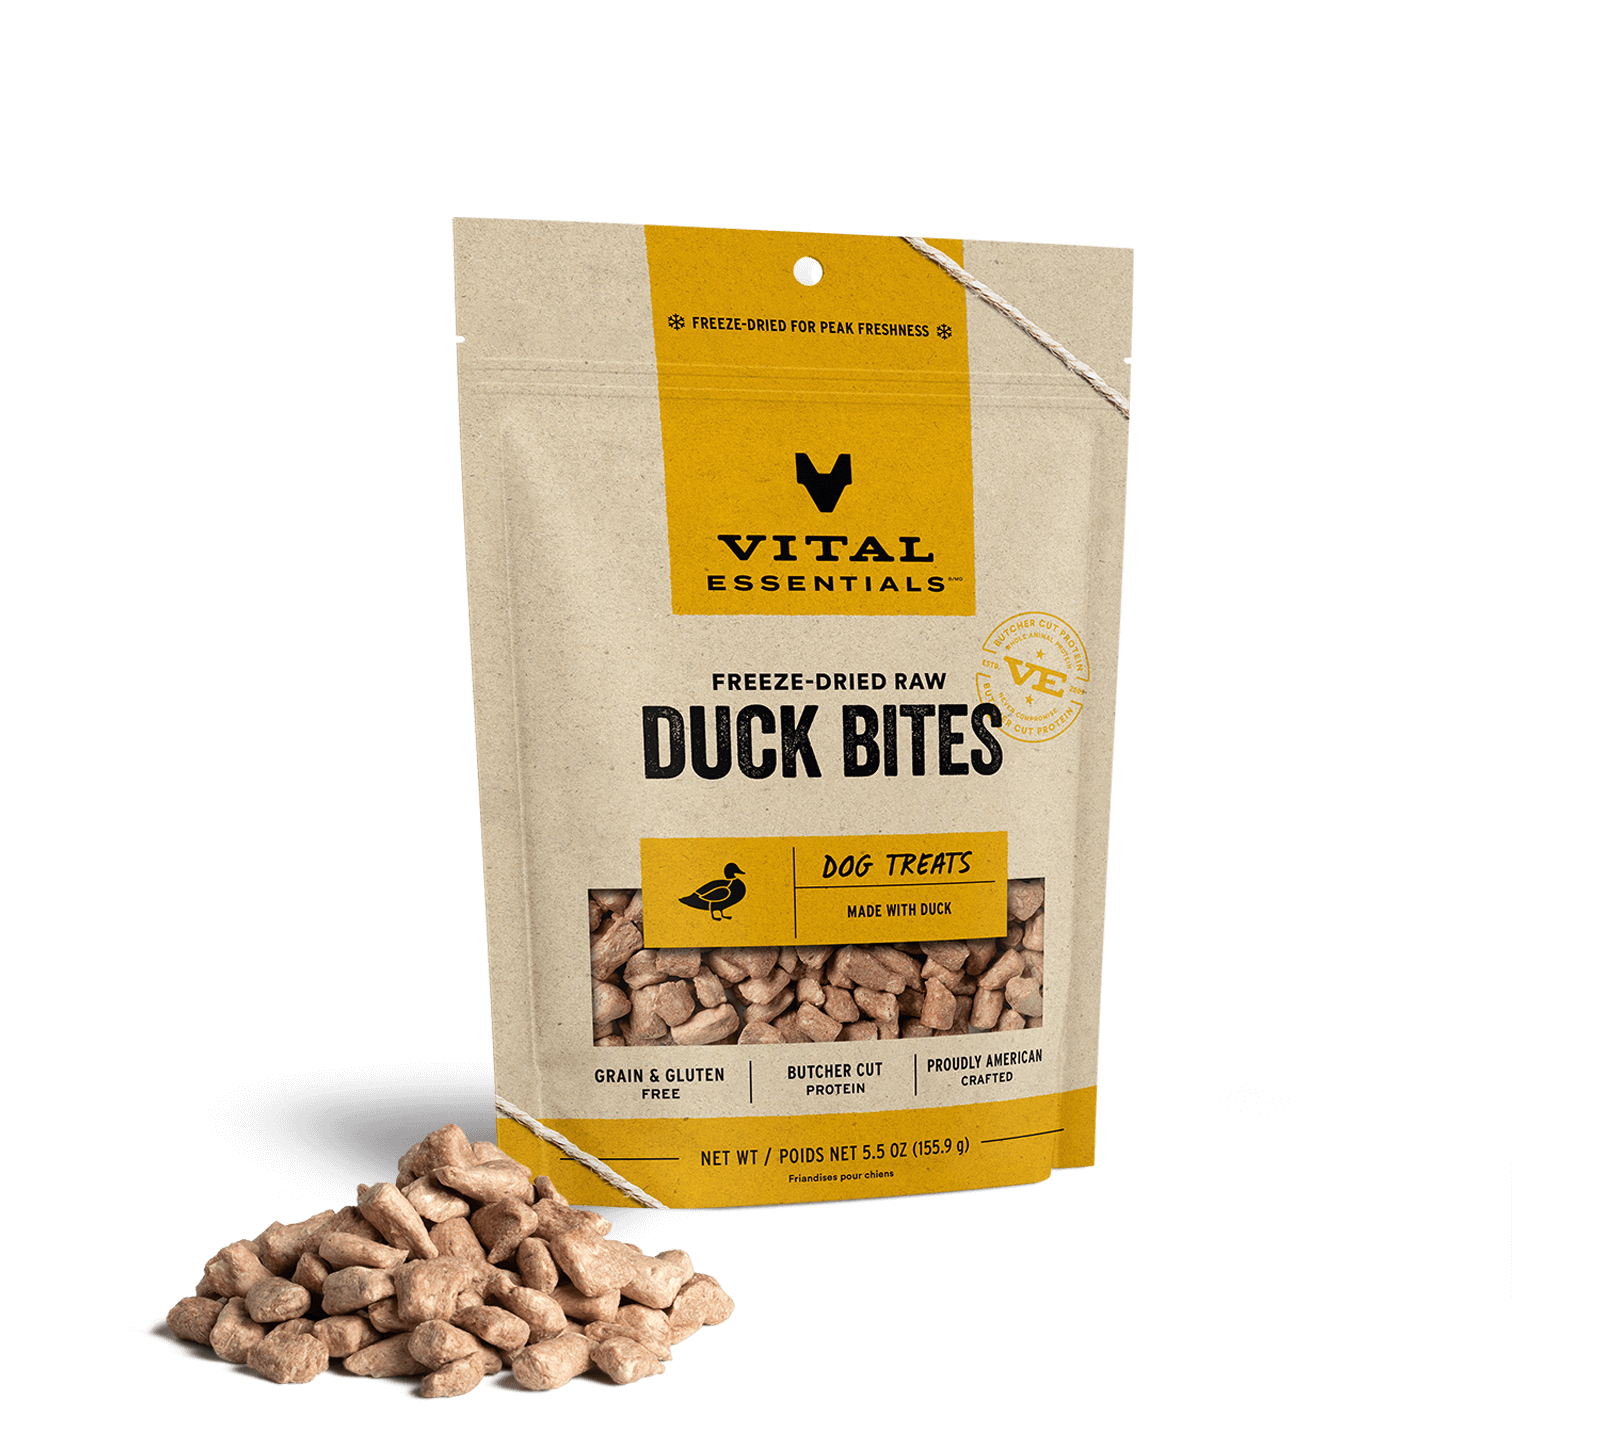 Vital Essentials Freeze-Dried Duck Bites Dog Treats, 5.5 oz - Health/First Aid